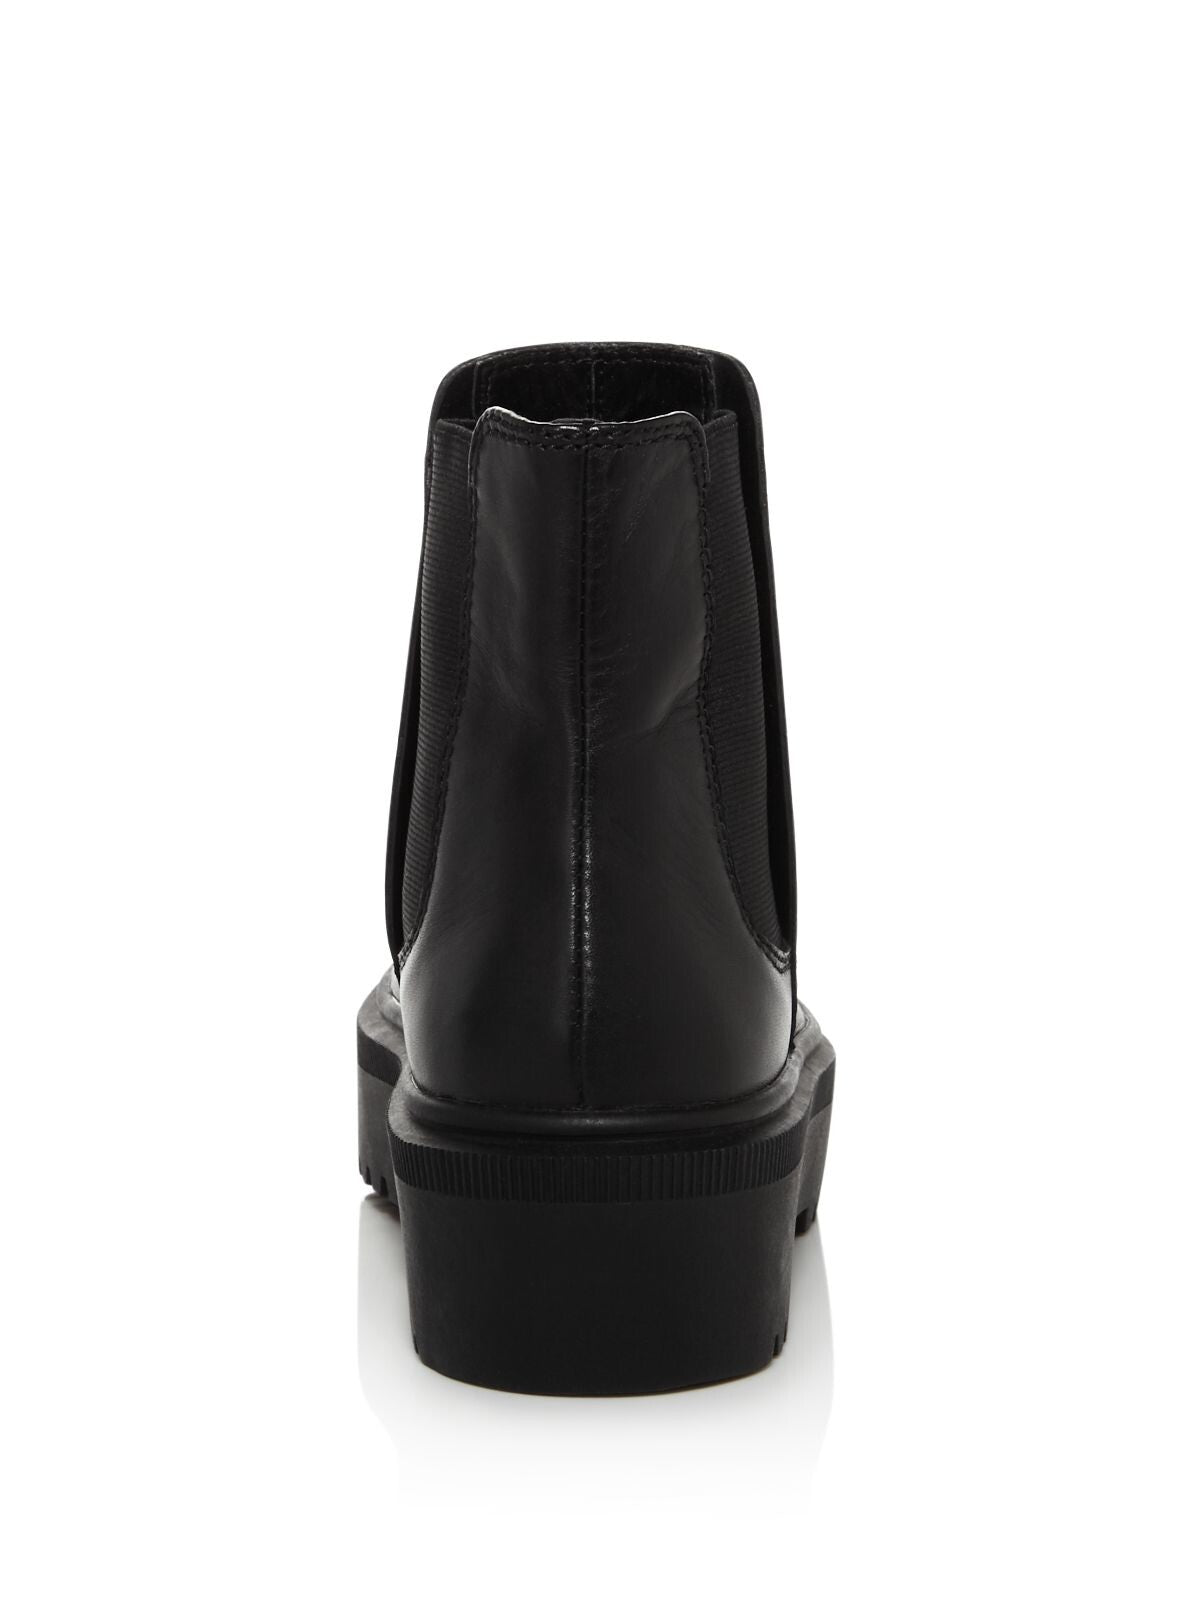 AQUA Womens Black Padded Lug Sole Goring Loren Round Toe Platform Leather Boots Shoes 10 M